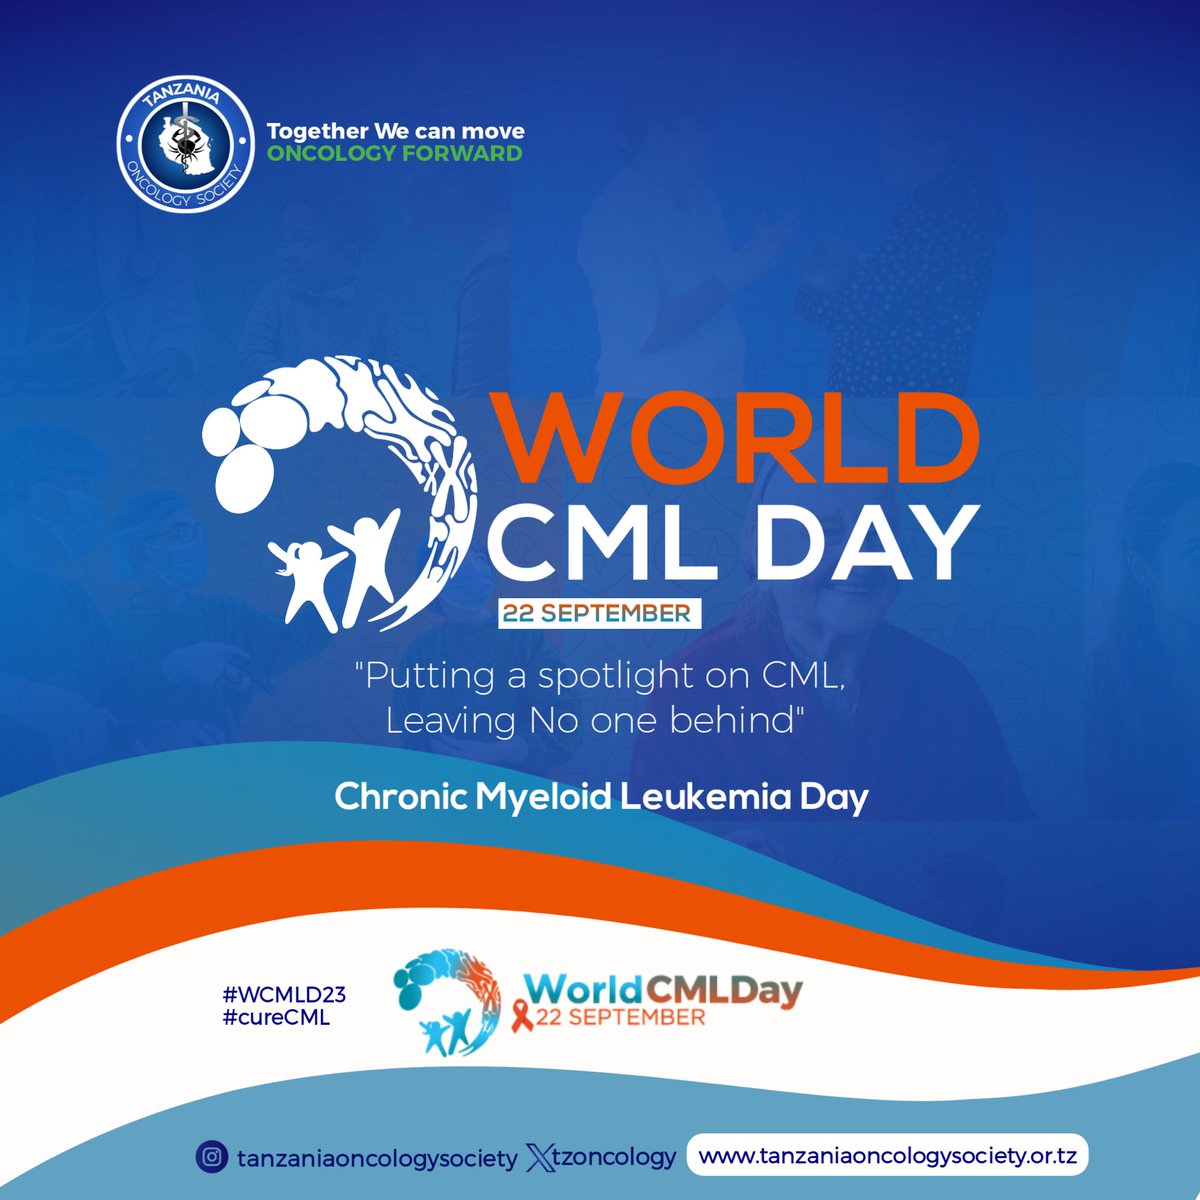 World Chronic Myeloid Leukemia Day 2023

#WCMLD23
#cureCML